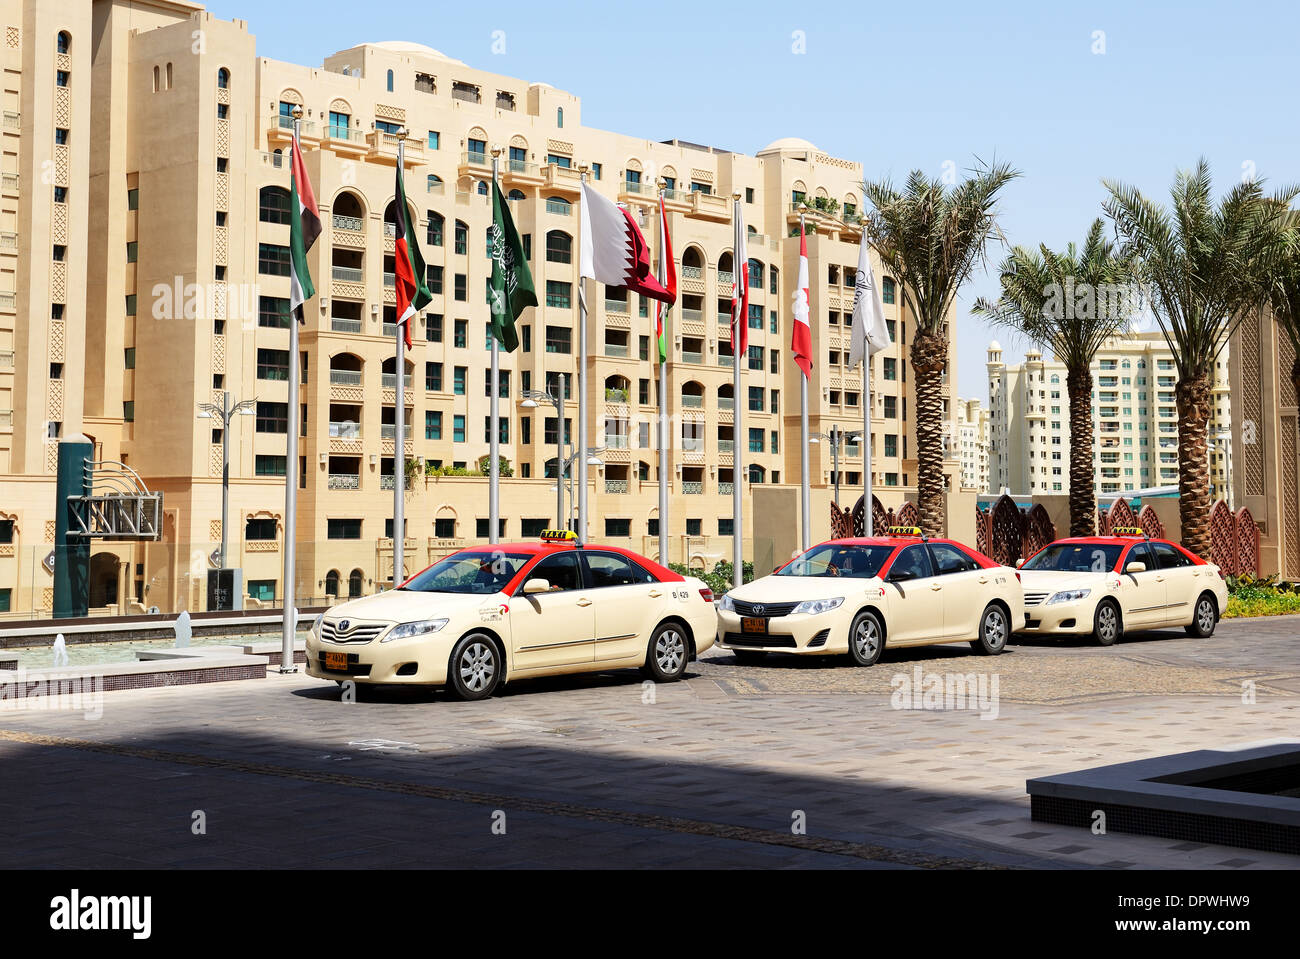 The Dubai Taxi cars waiting for clients near hotel, Dubai, UAE. Stock Photo